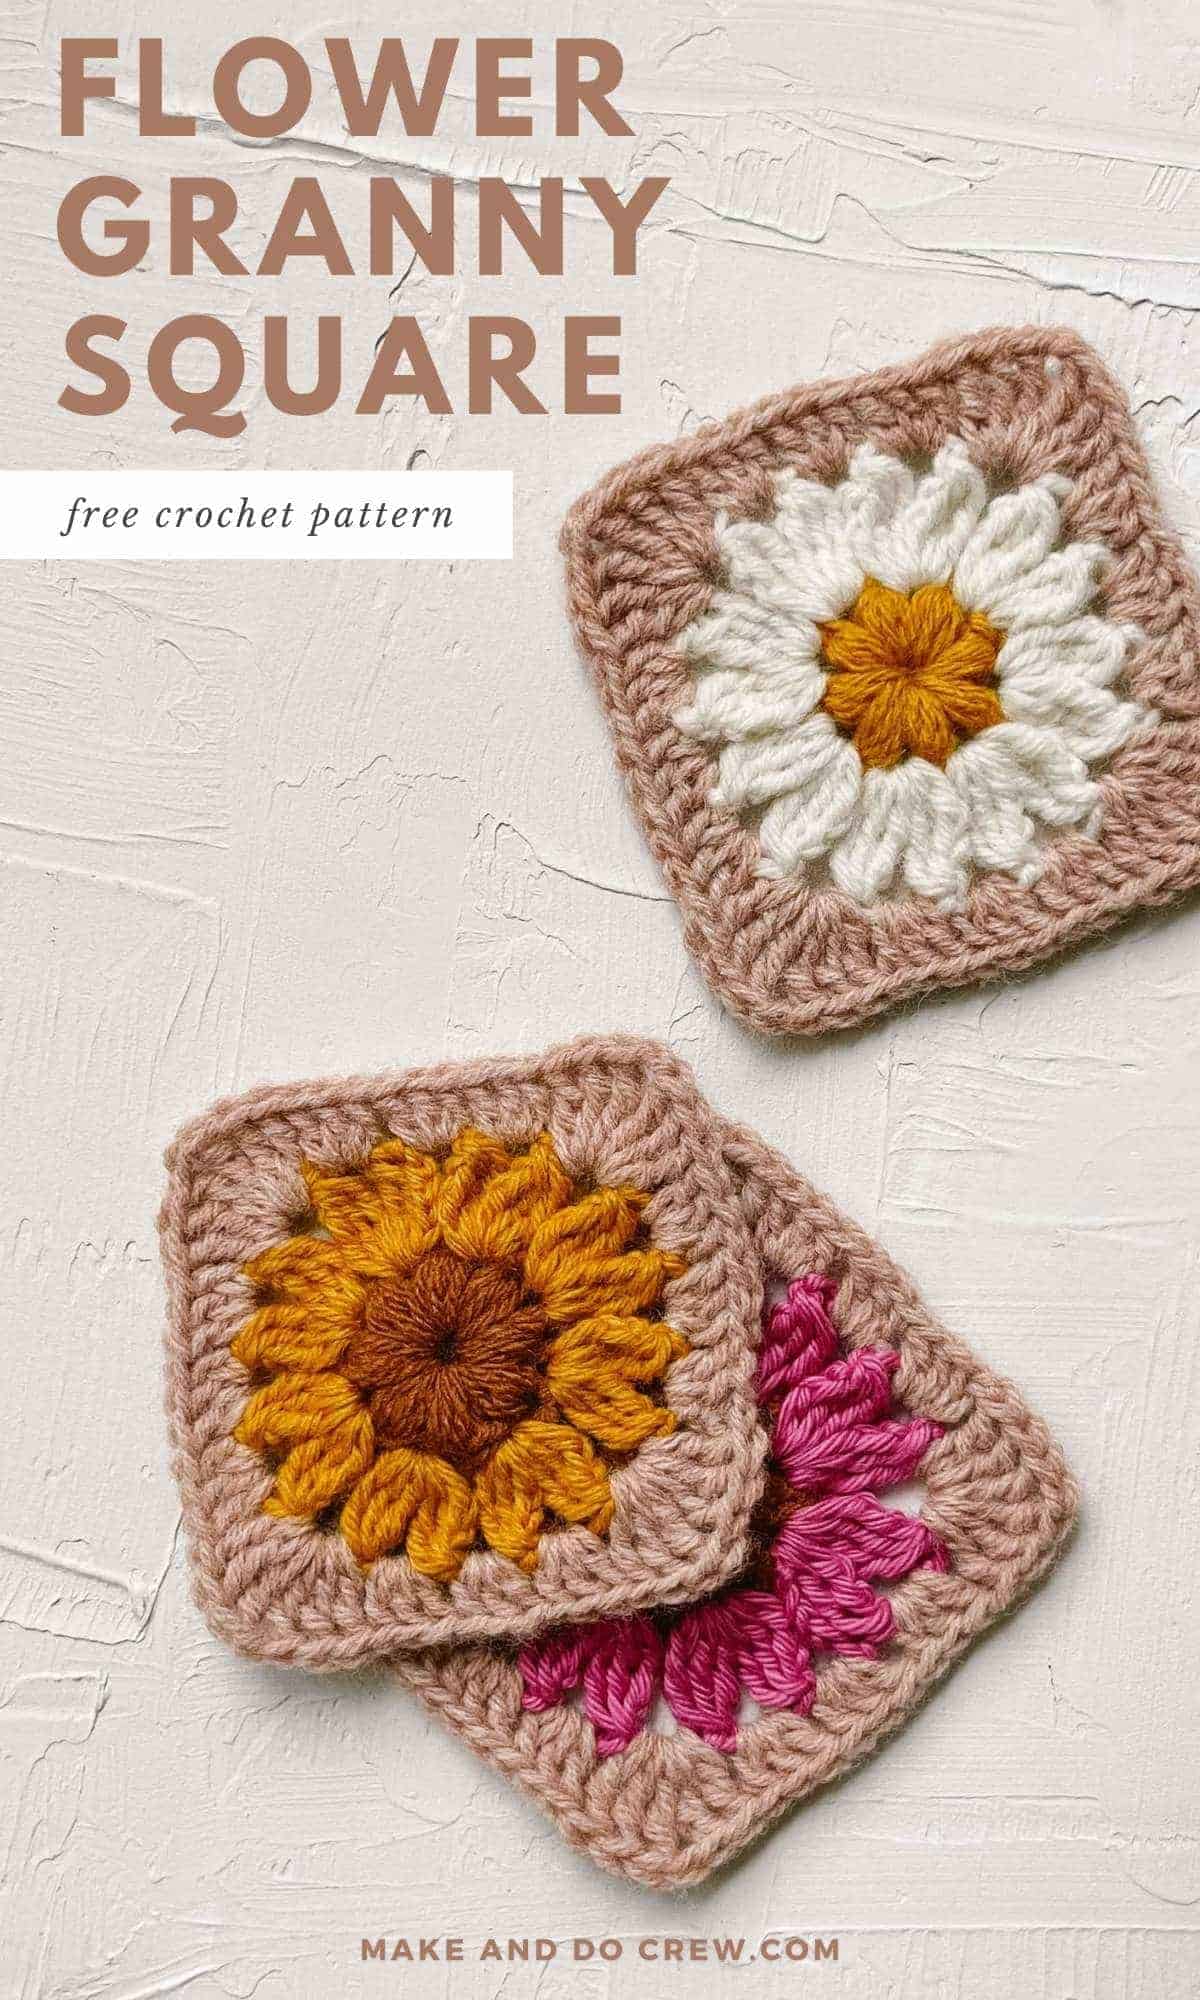 Three crochet flower granny squares.